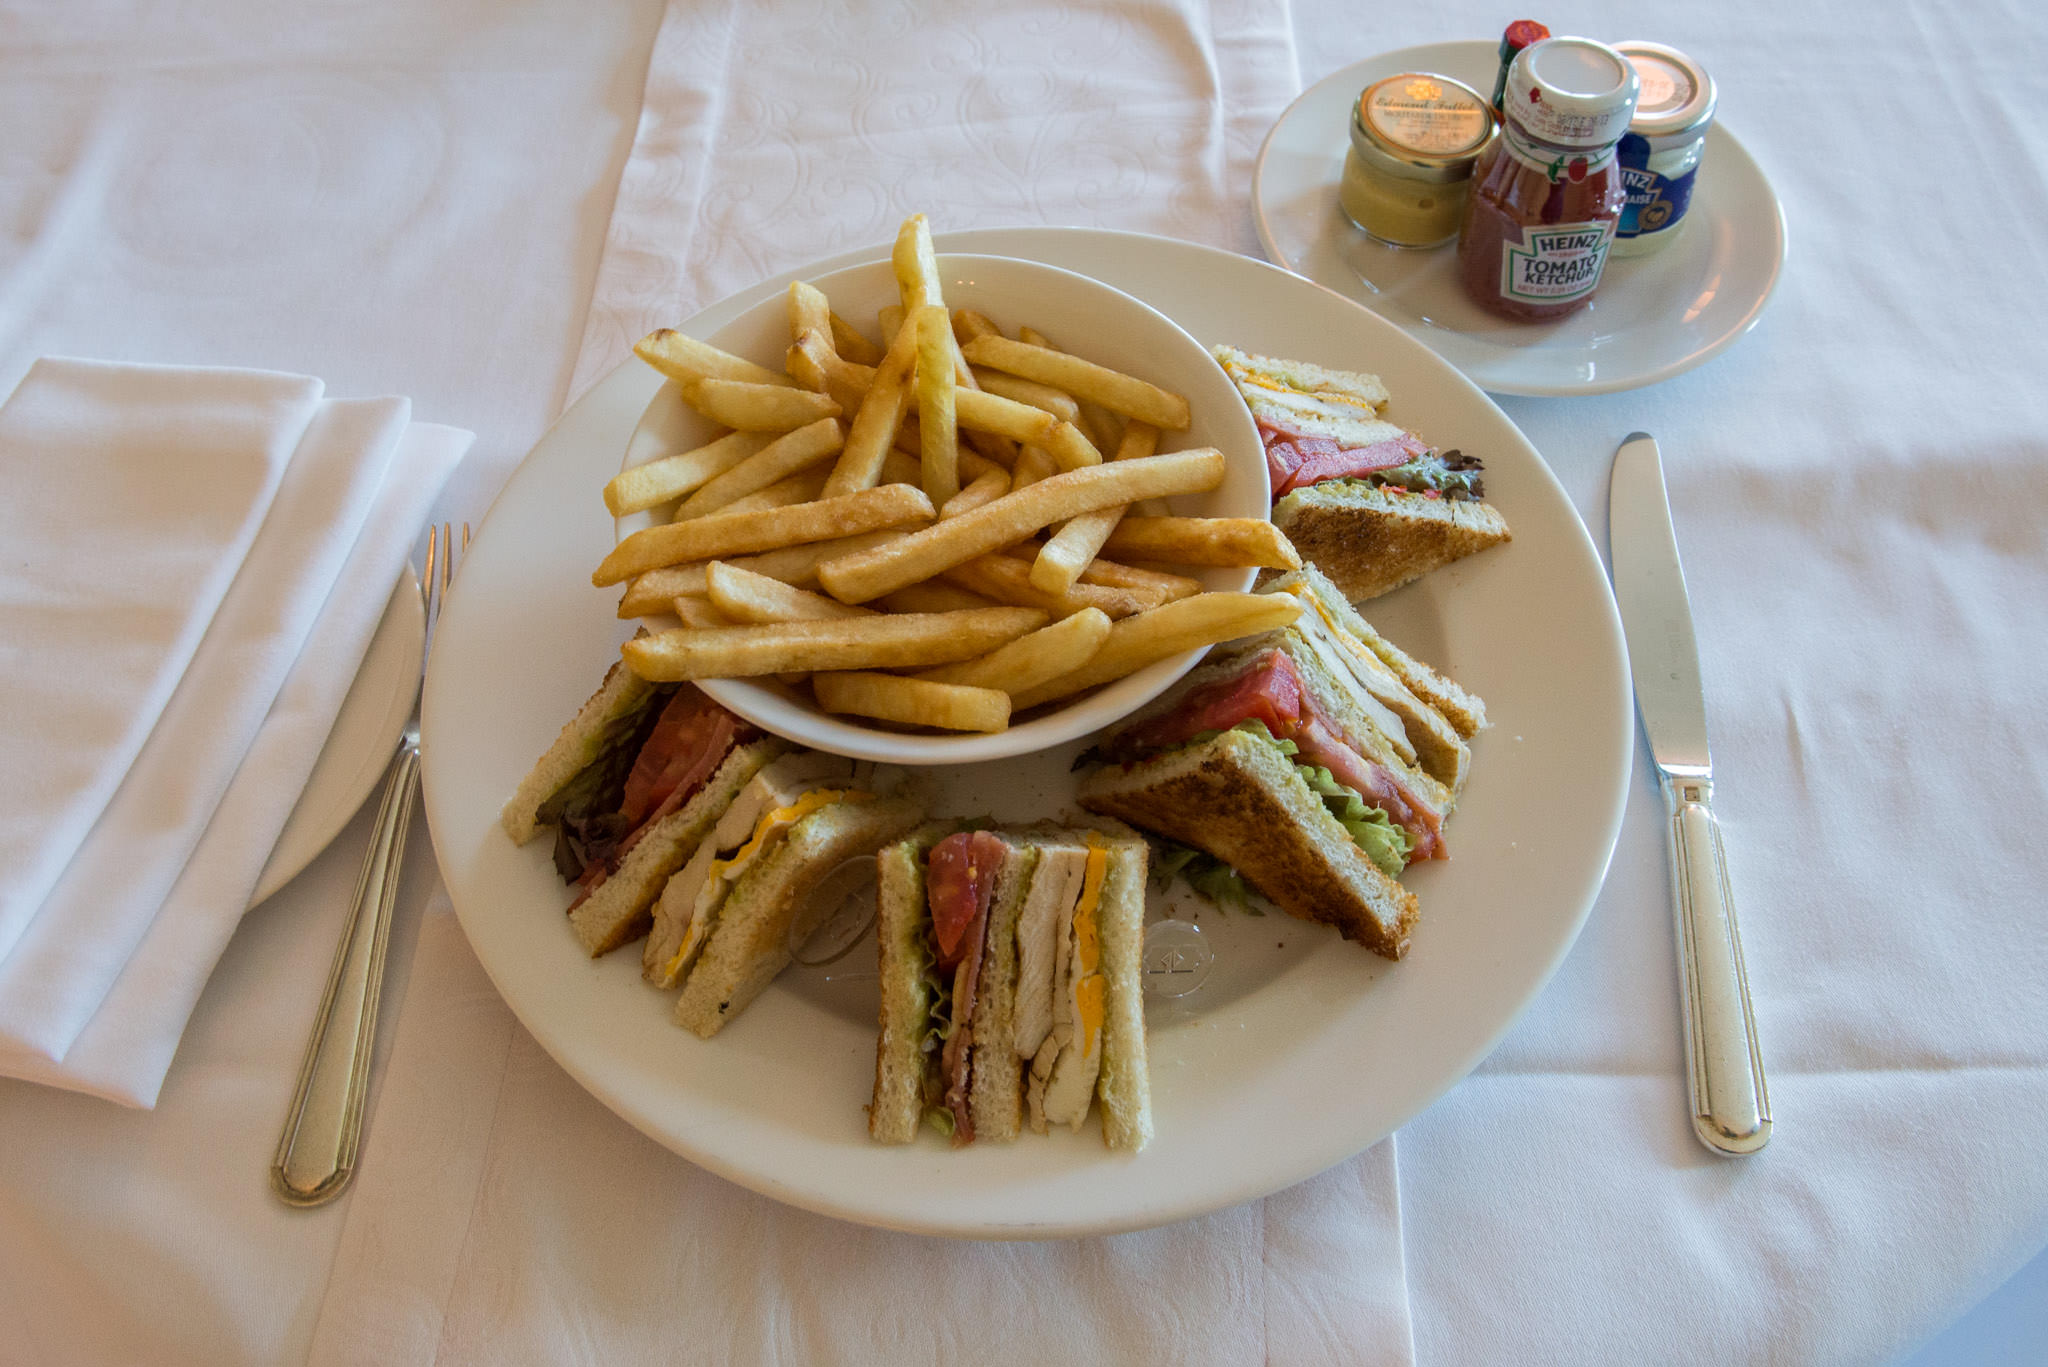 Room service club sandwich